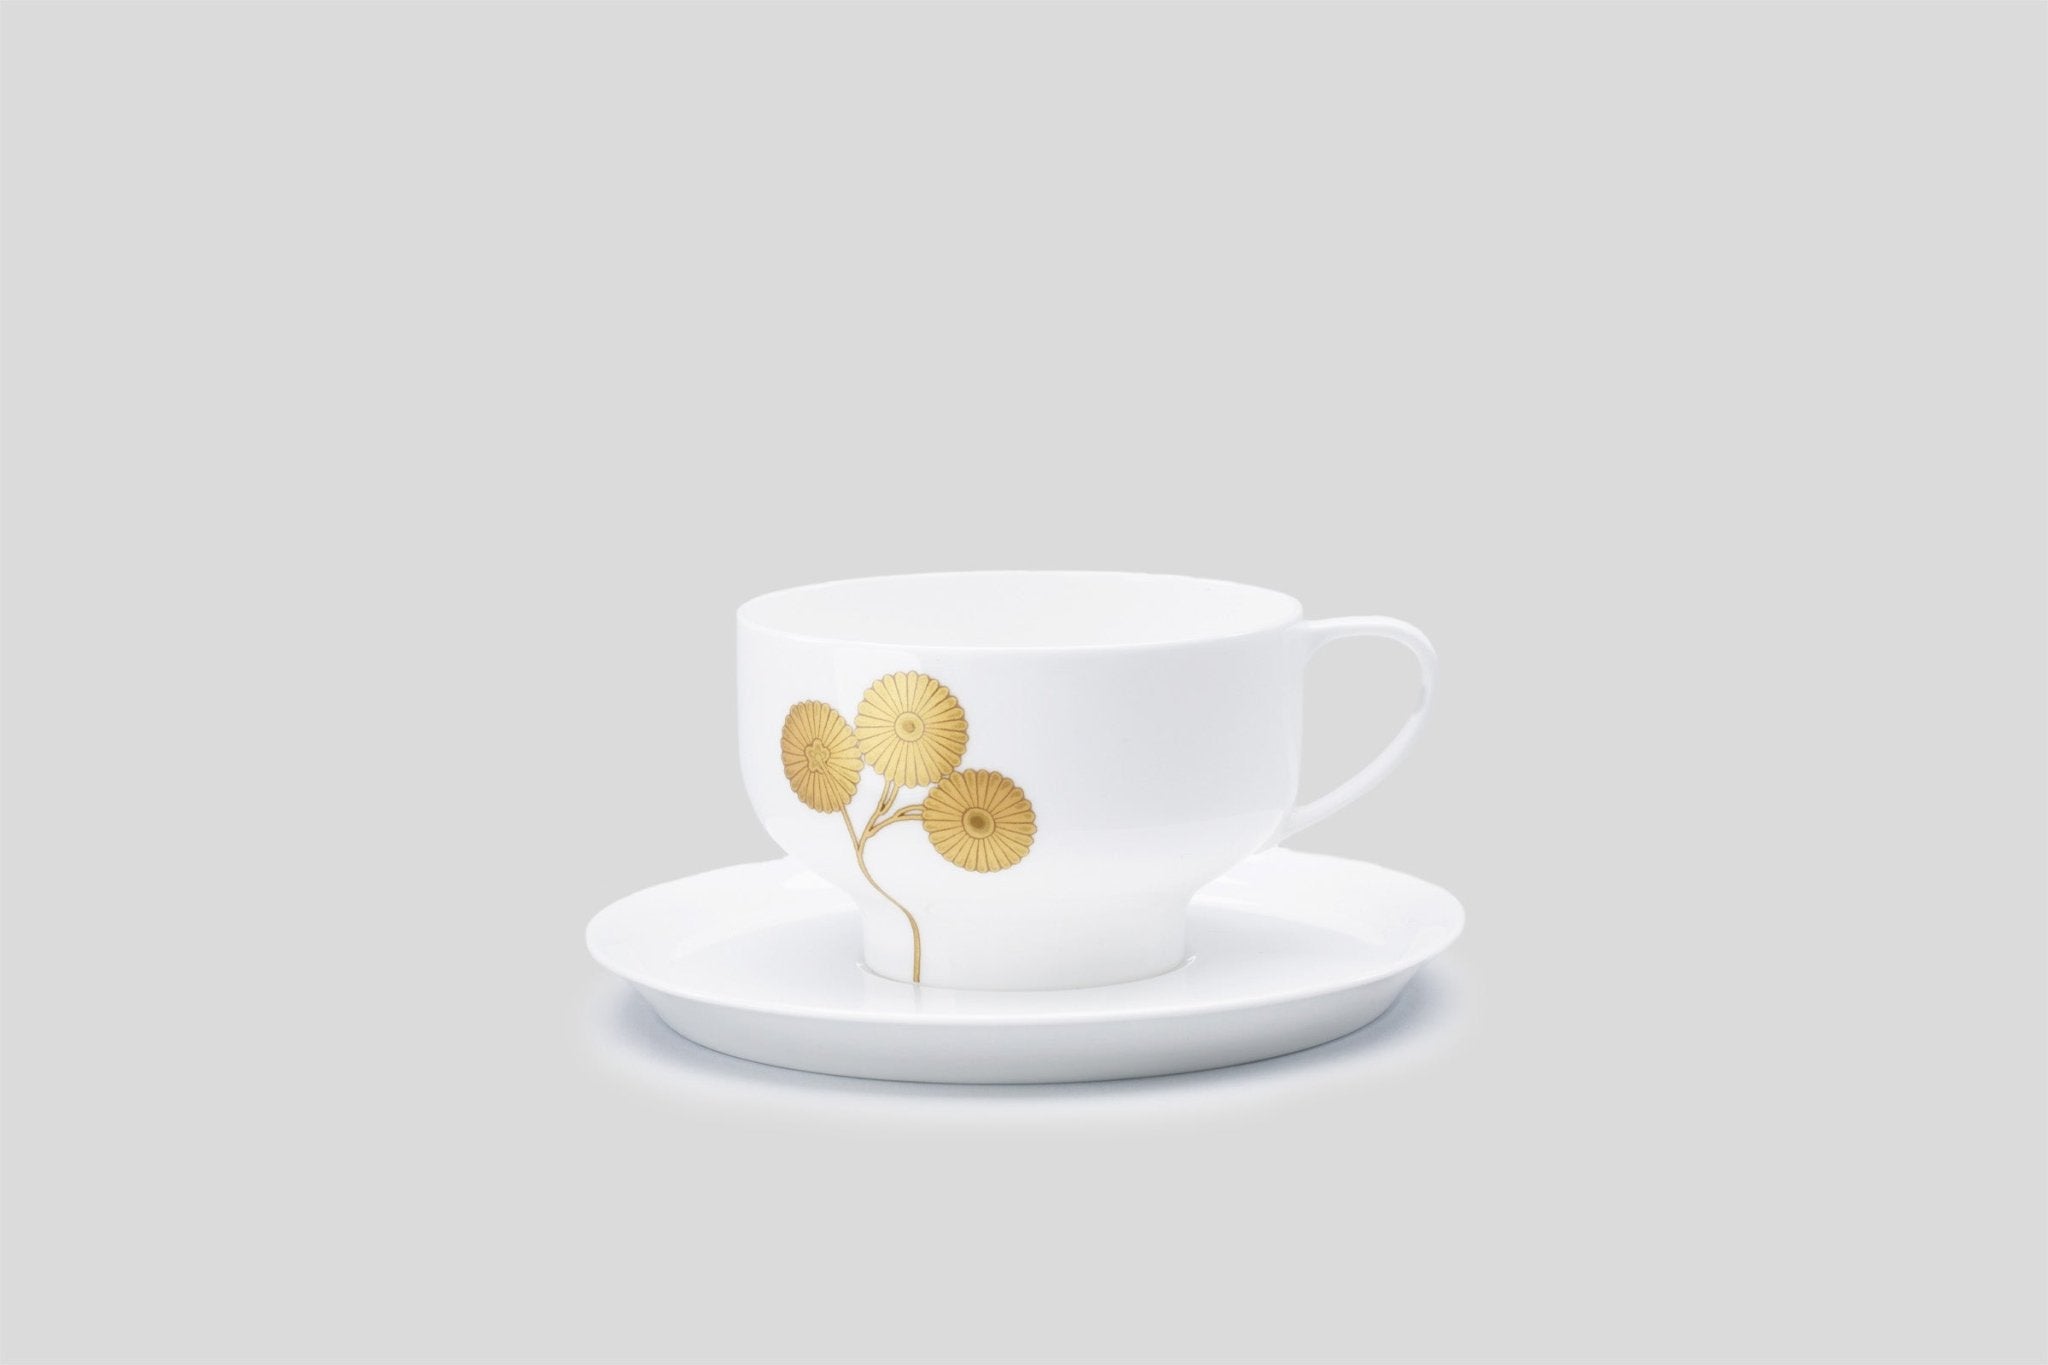 Designer-Luxury-Modern-Nikko Sallus Teacup & Saucer-Nikko-Sallus-Gold-Bodo Sperlein-Bone China-Designer-Luxury-Modern-Tasse-Becher-Kaffee Tasse